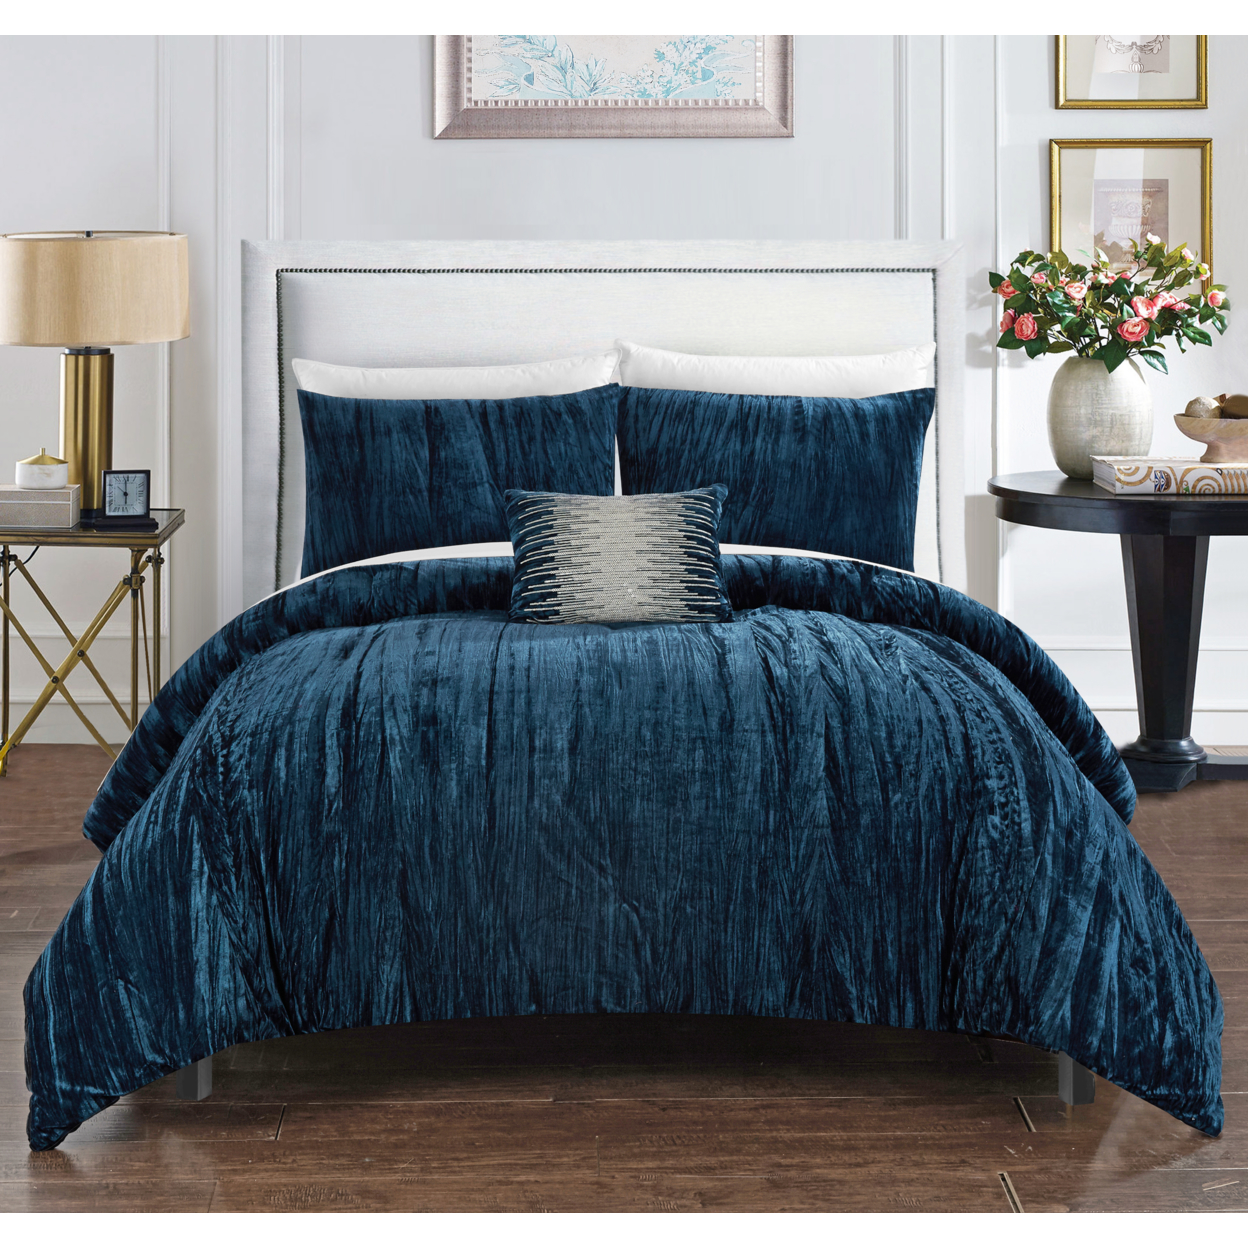 Merieta 4 Piece Comforter Set Crinkle Crushed Velvet Bedding - Decorative Pillow Shams Included - Plum, Queen